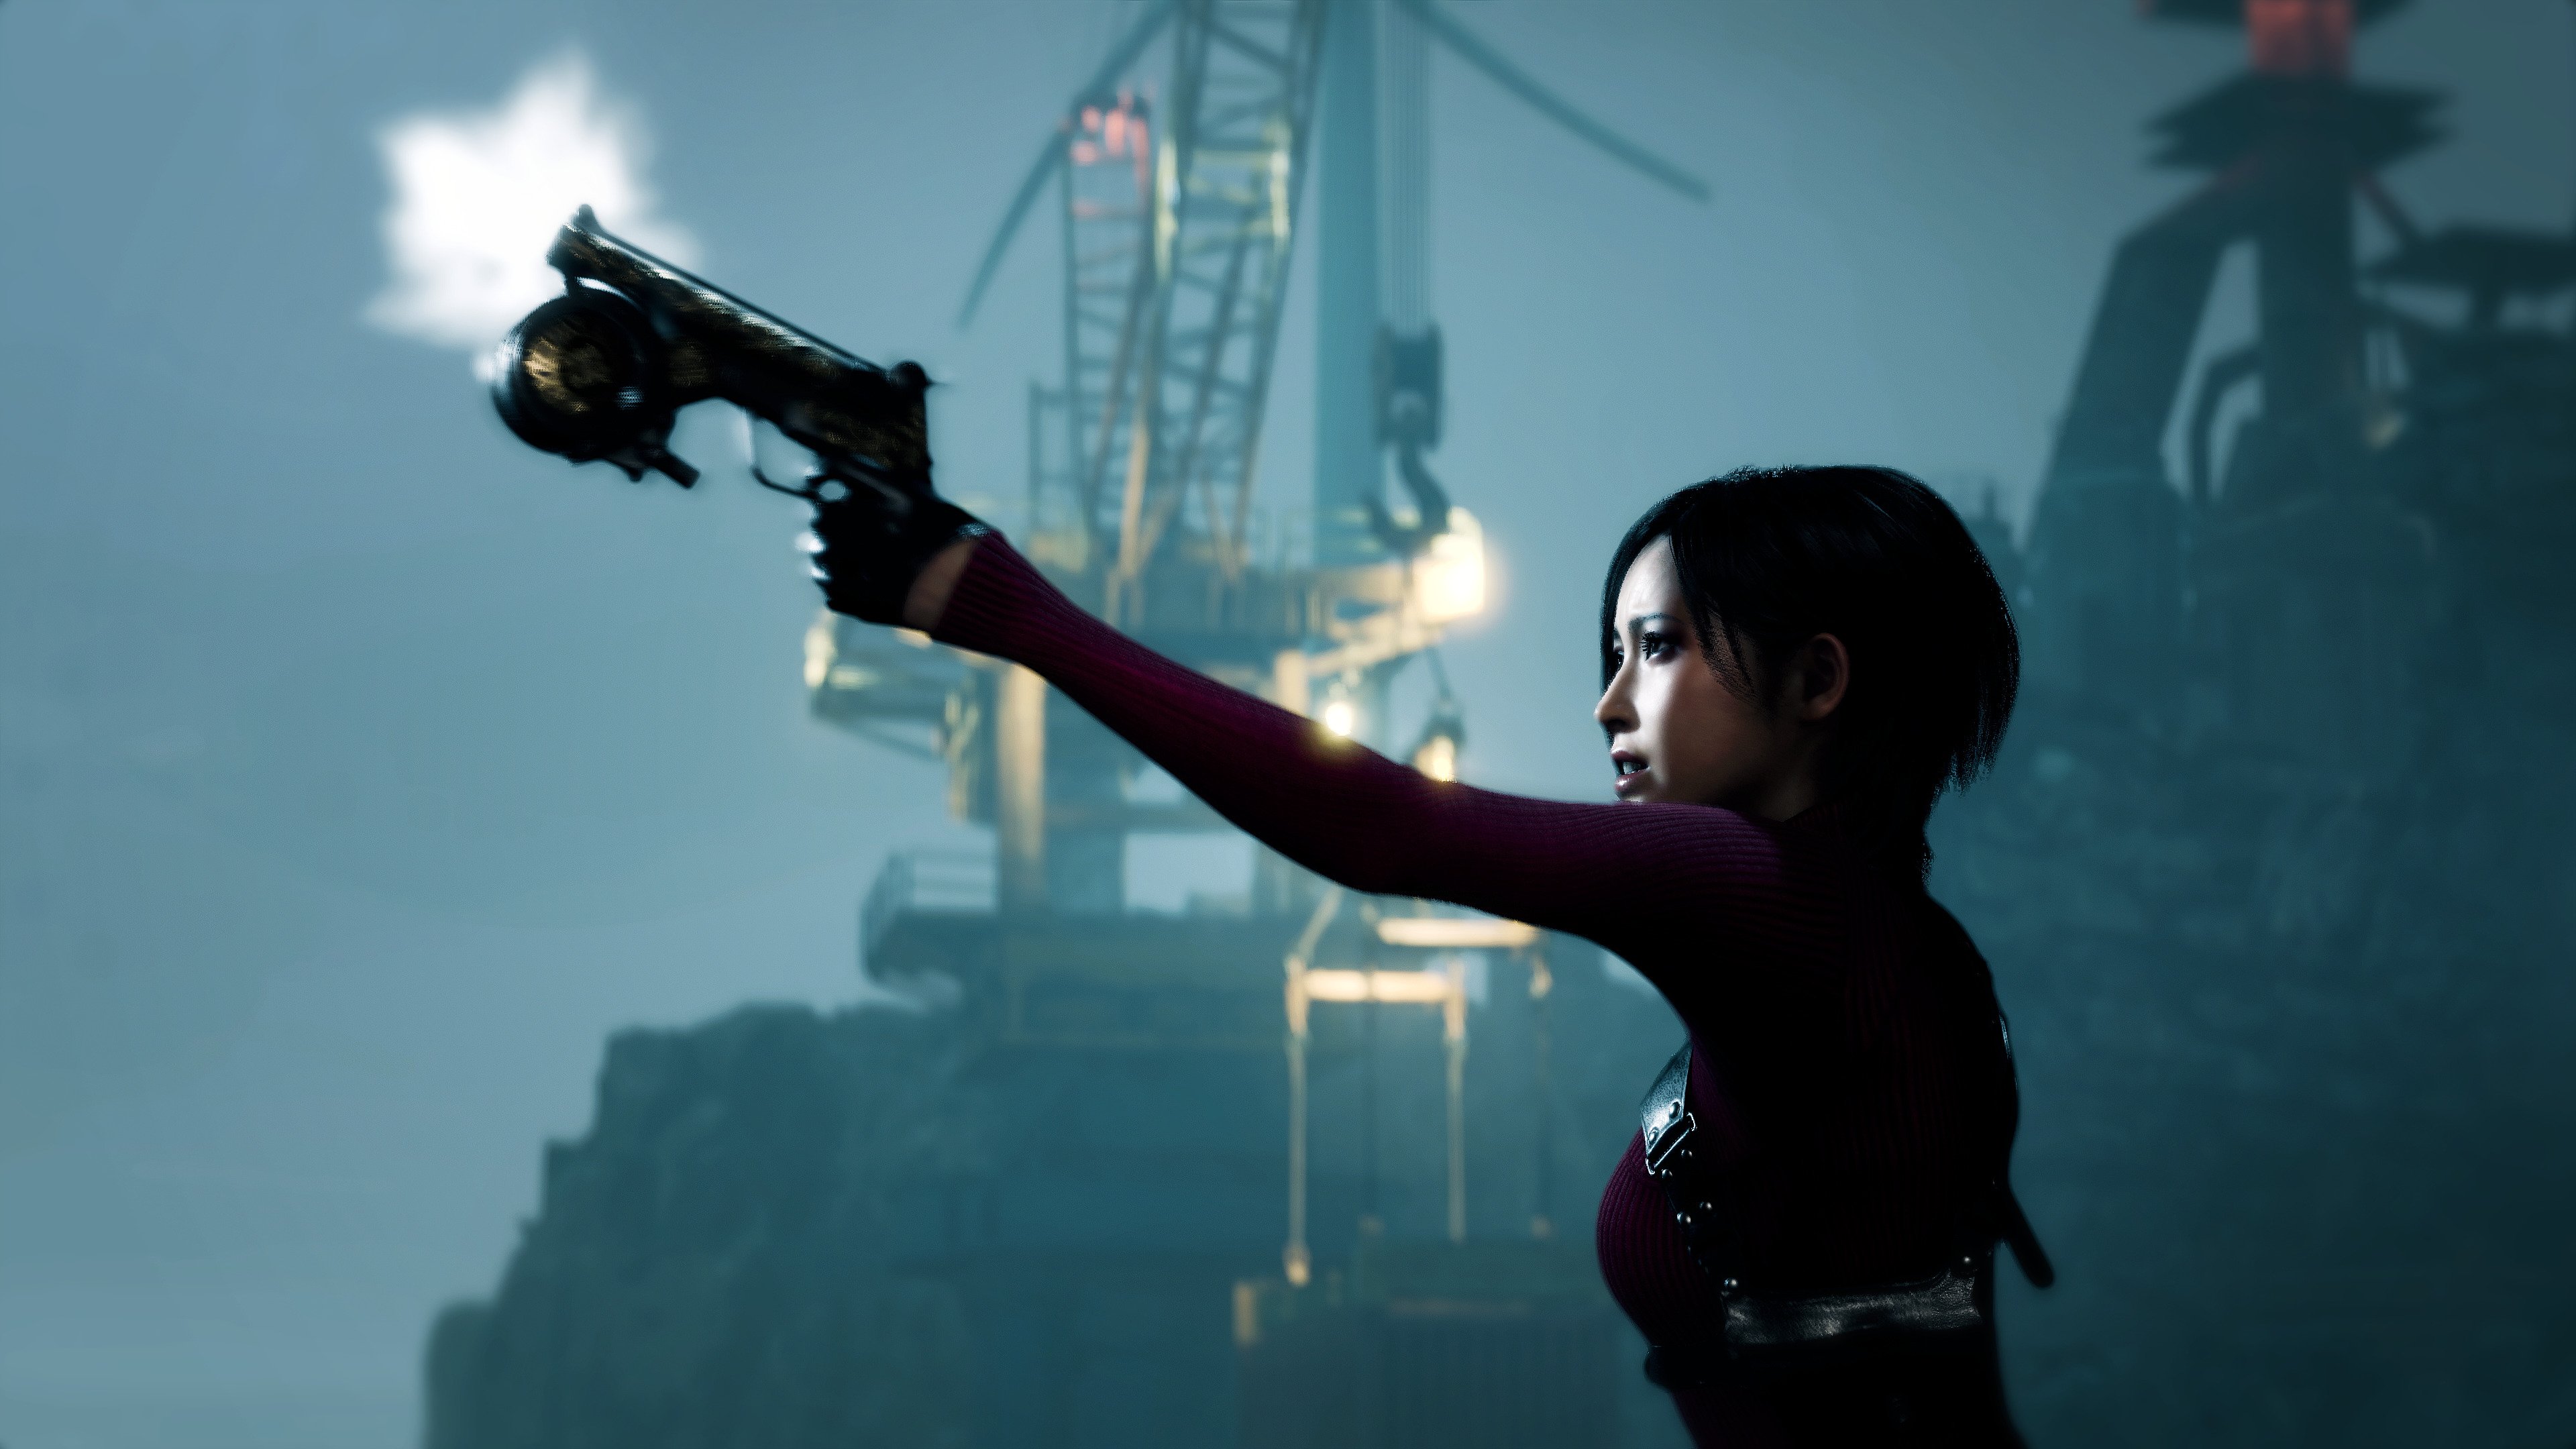 Resident Evil 4 “Separate Ways” Ada Wong DLC and New Mercenaries